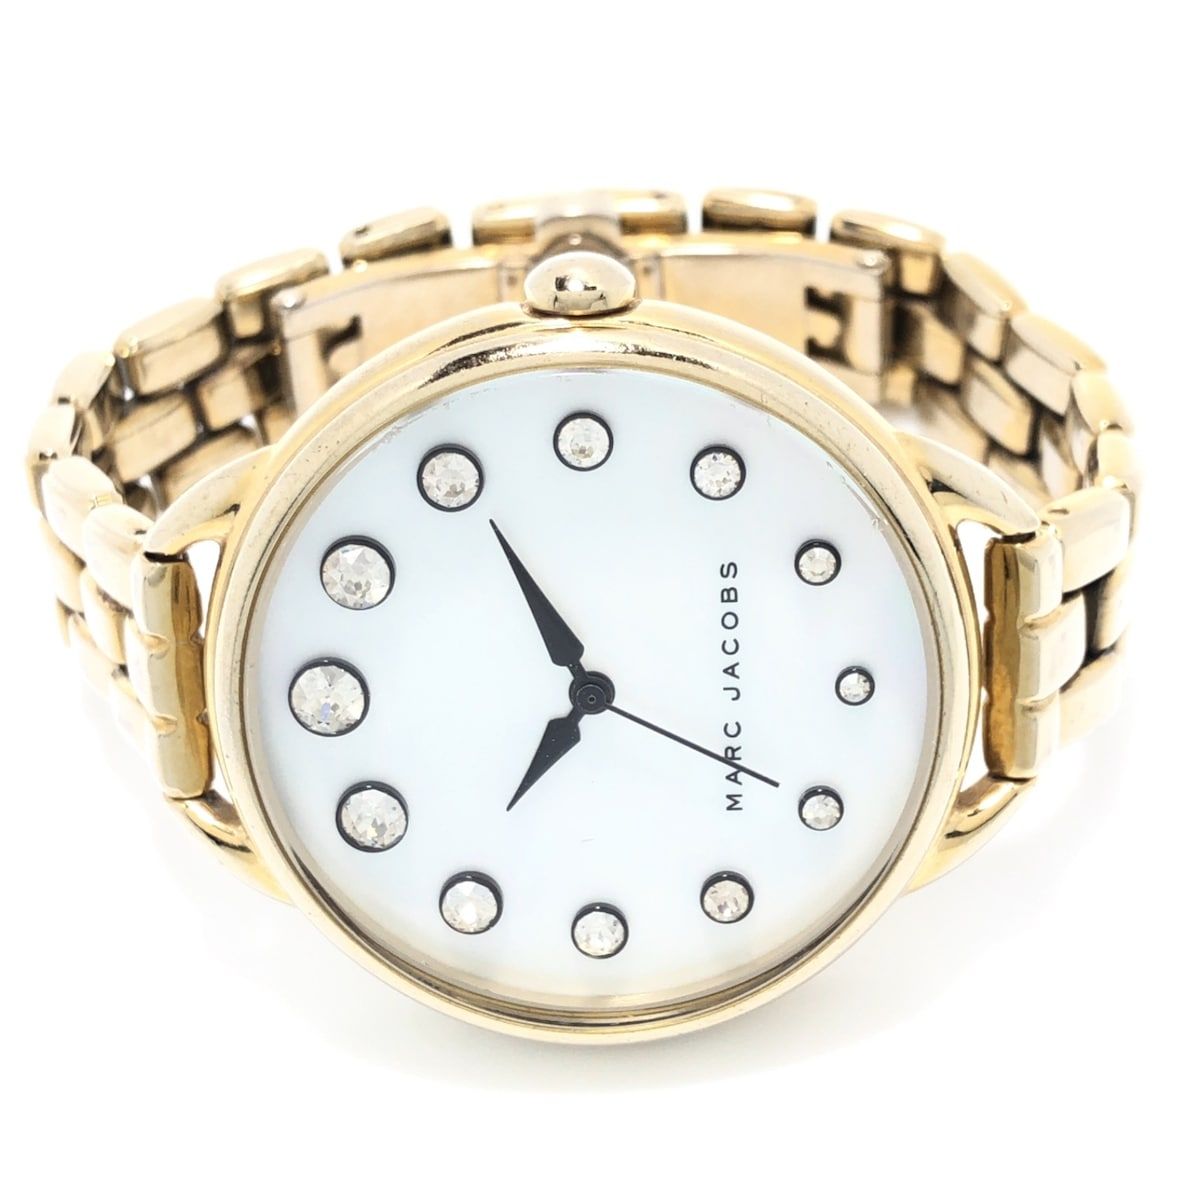 MARC JACOBS(マークジェイコブス) 腕時計美品 BETTY MJ3509 レディース シェル文字盤/ラインストーンインデックス ホワイトシェル  - メルカリ